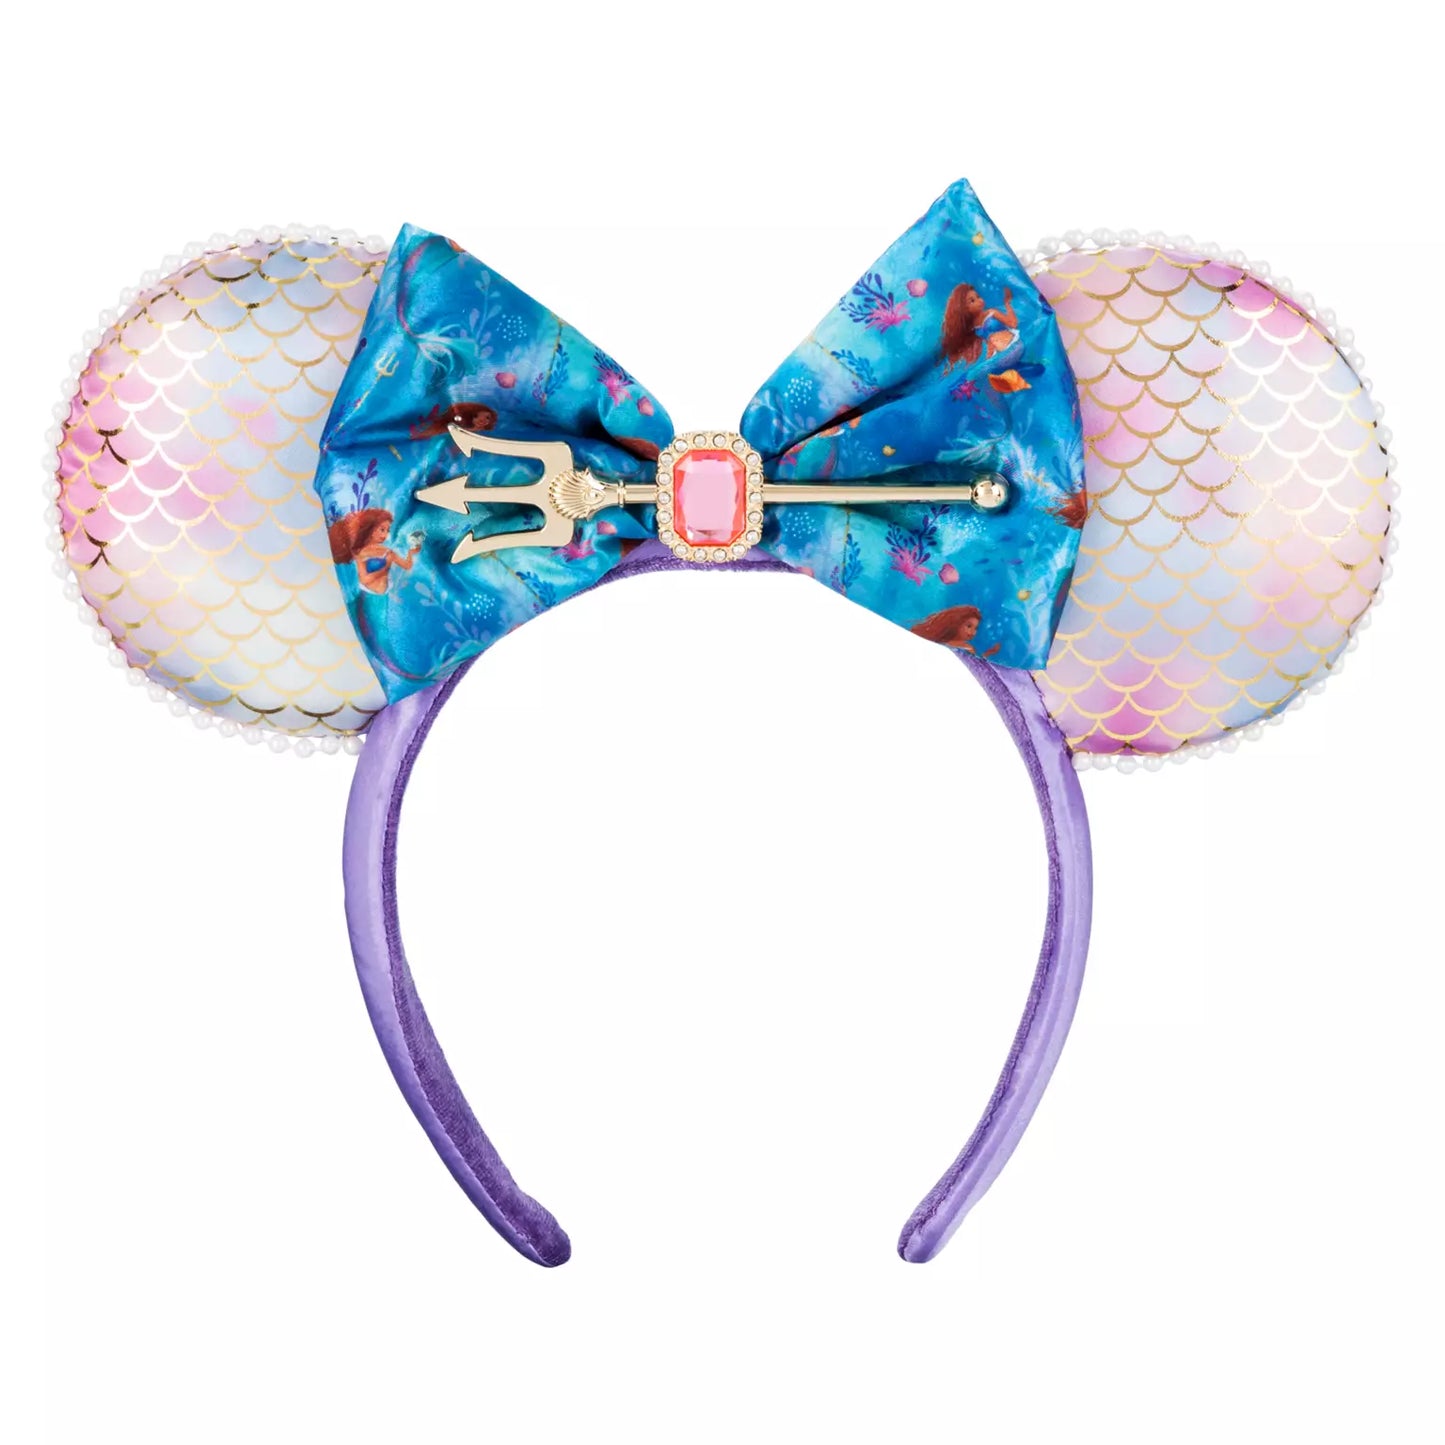 The Little Mermaid Live Action Disney Minnie Ear Headband